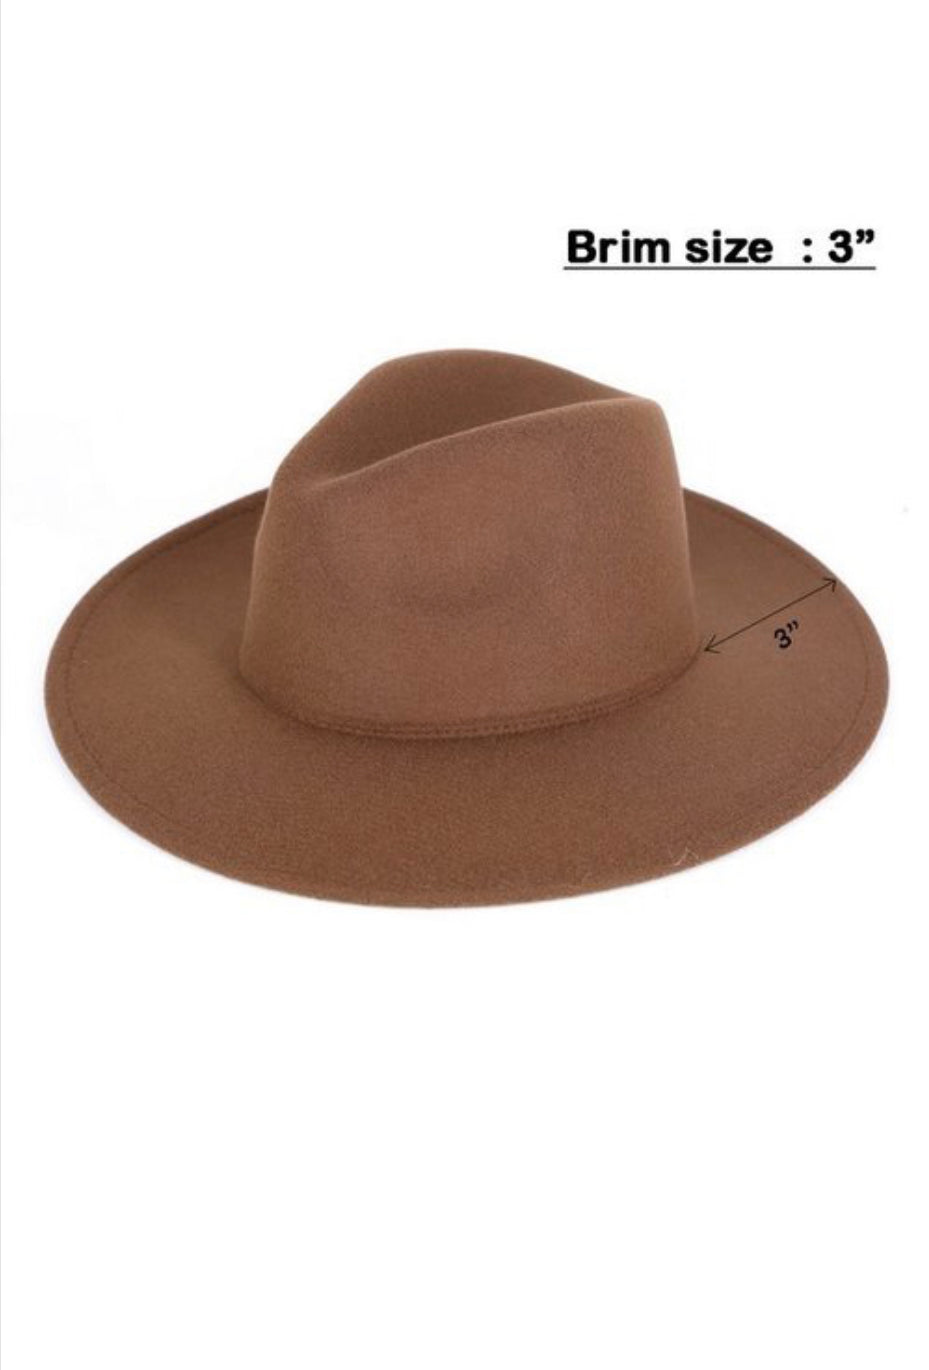 solid color felt fedora hat 3inch fedora hat all season fedora hat brown fedora hat